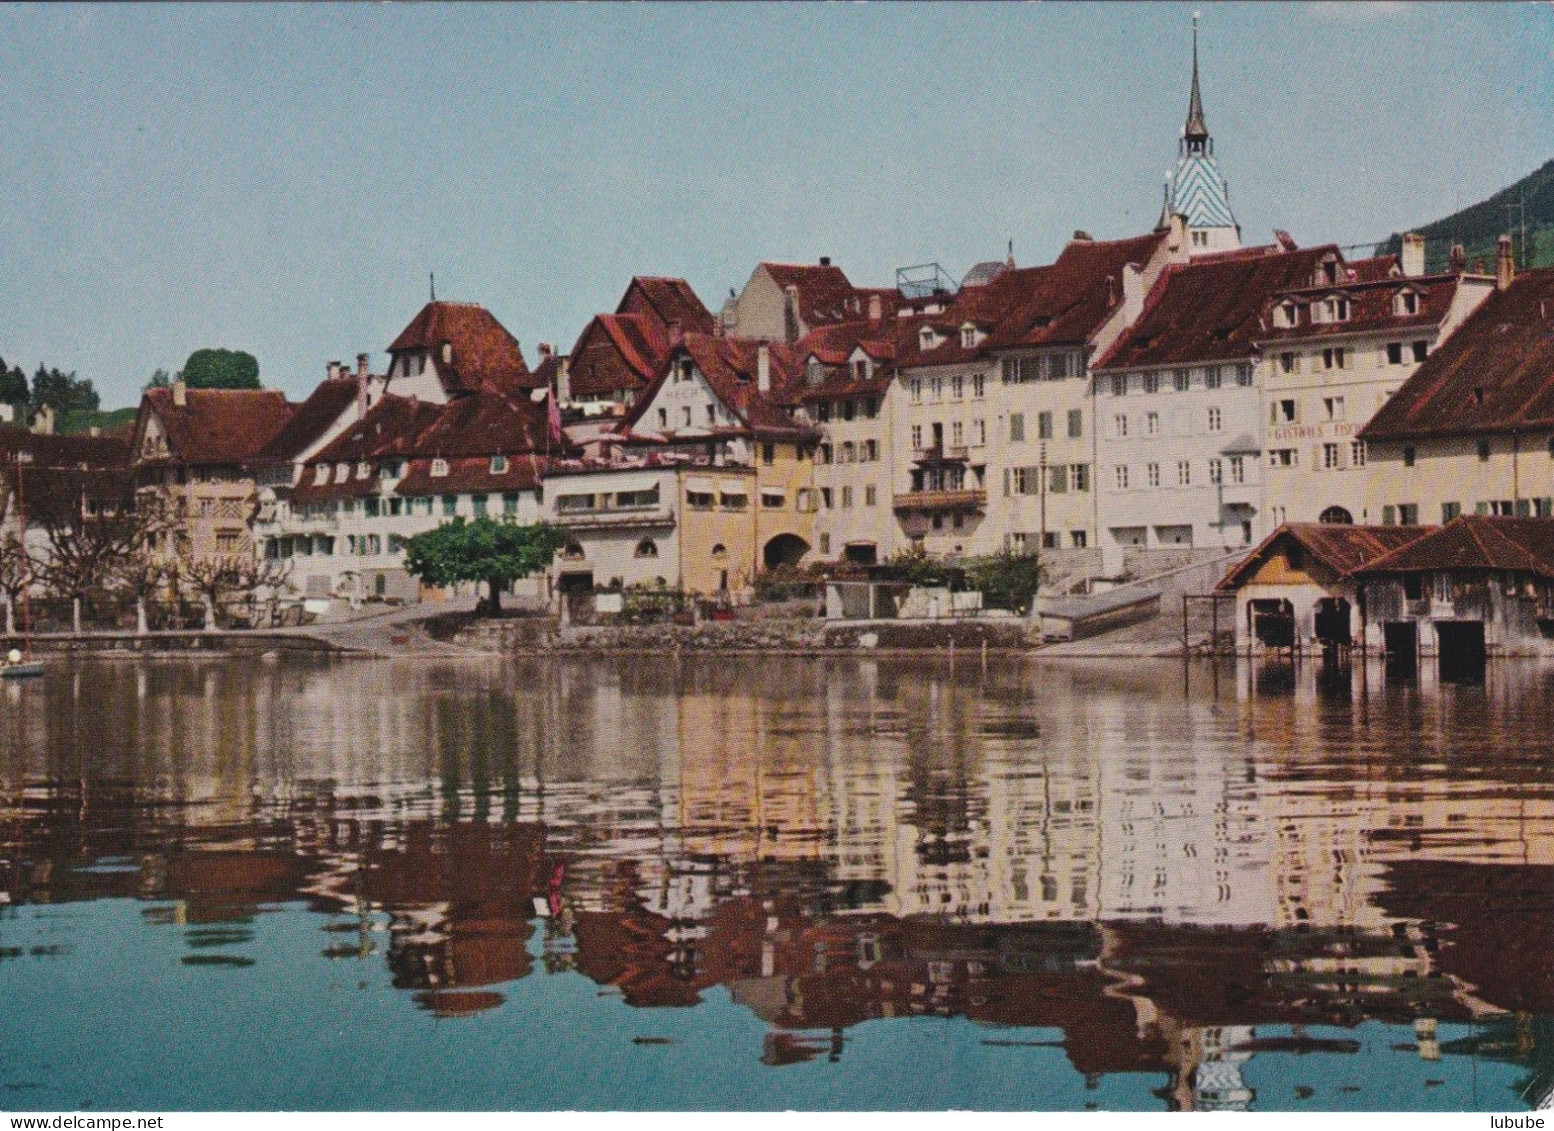 Zug - Der älteste Stadtteil        Ca. 1960 - Zug